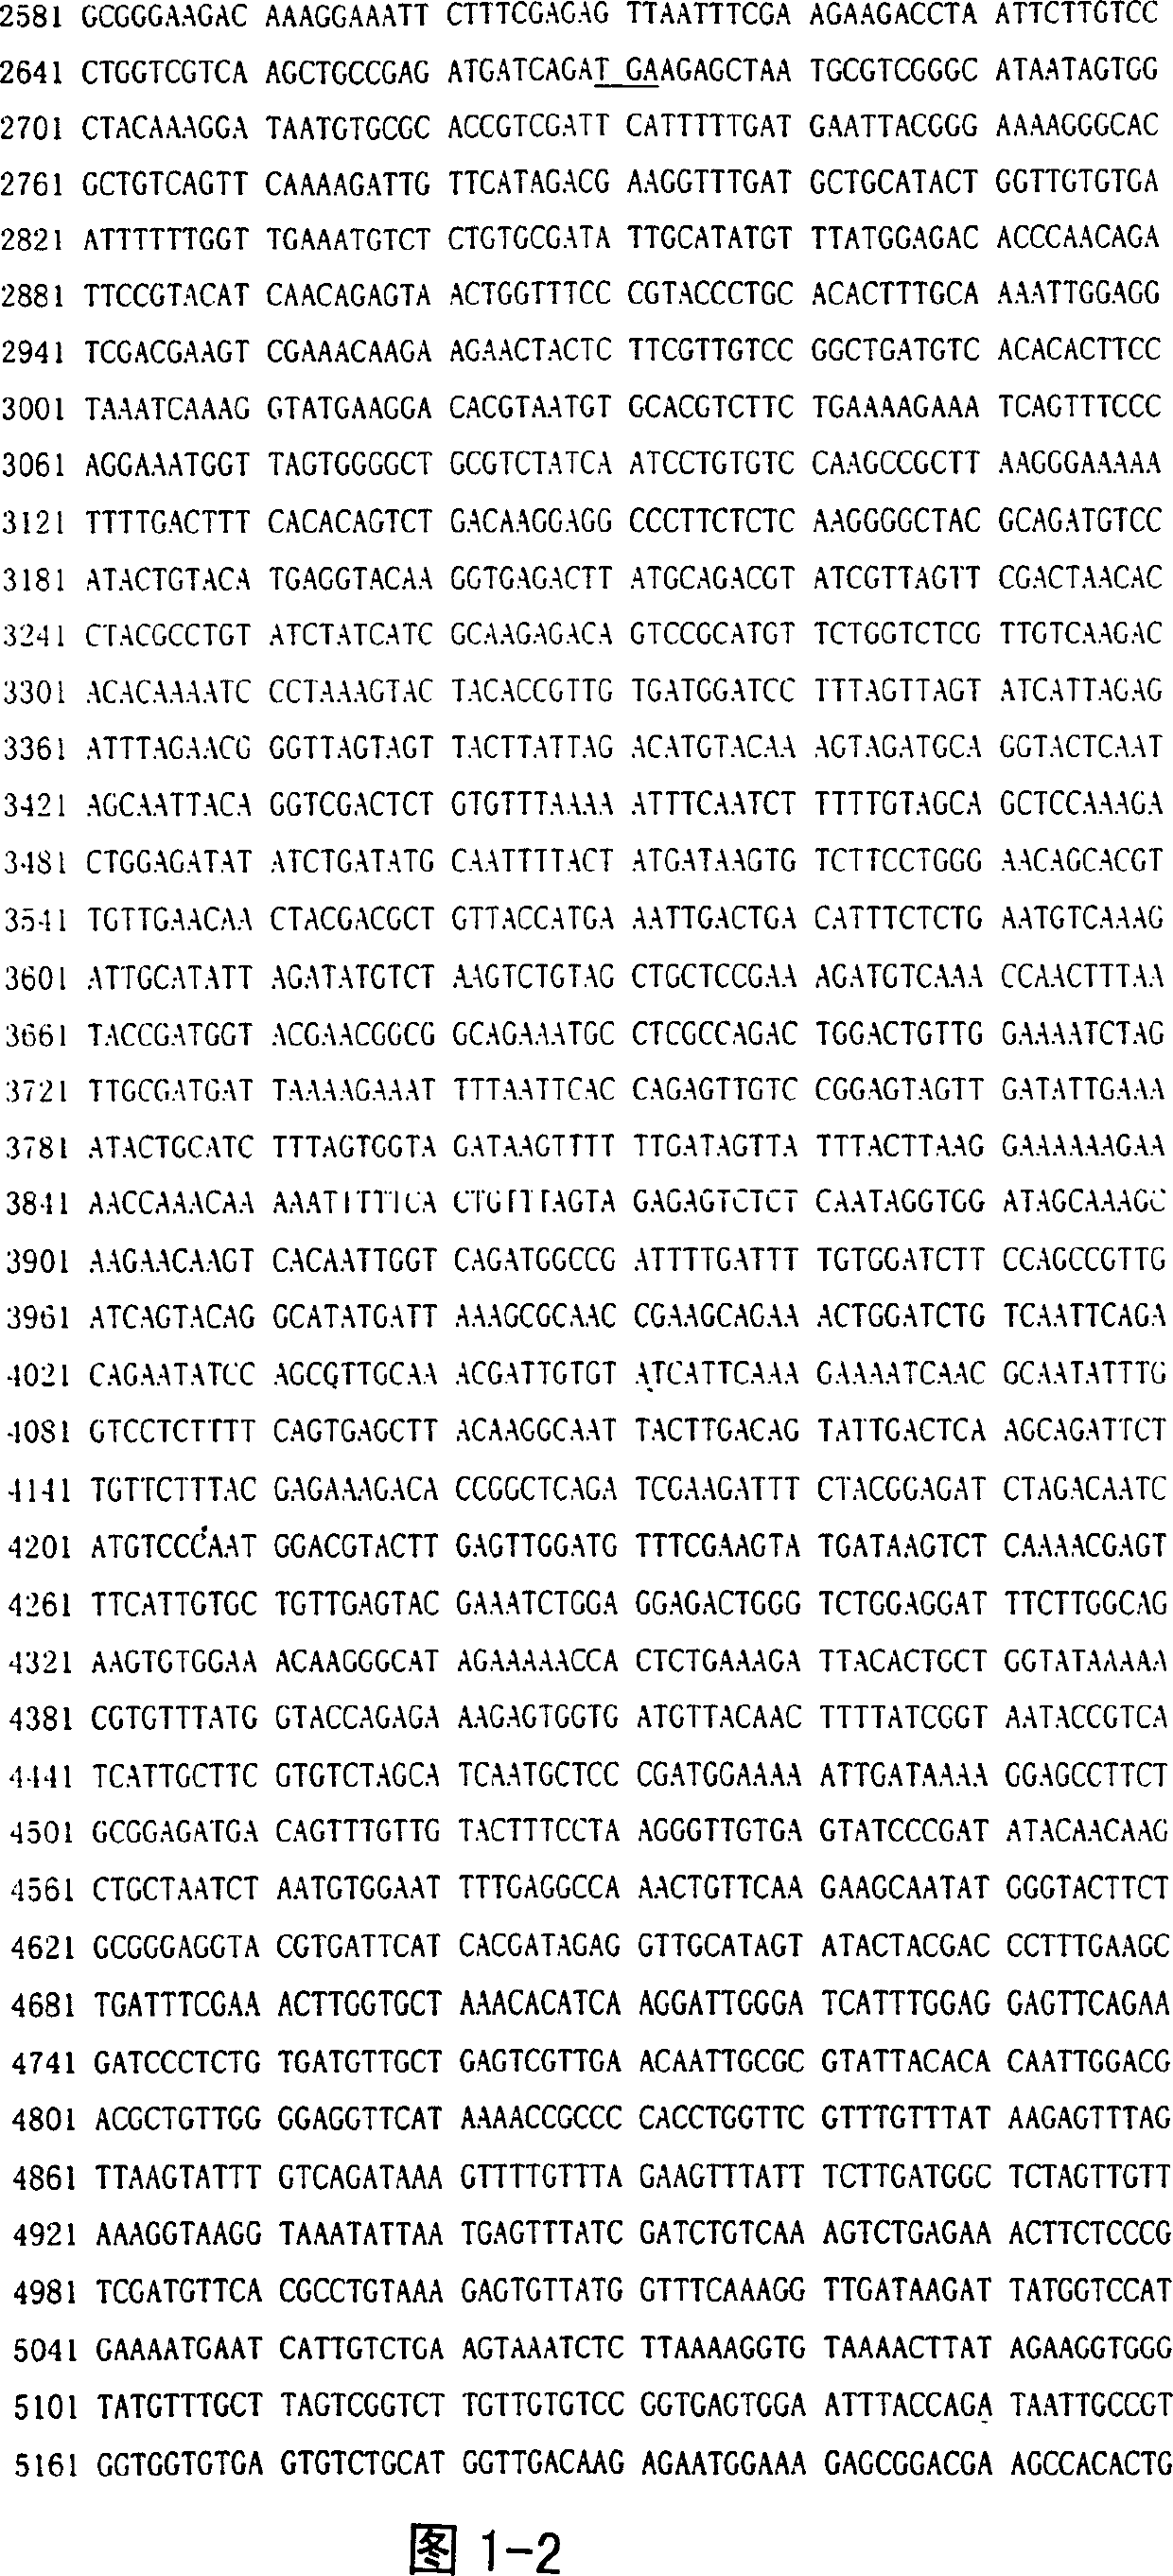 Low-virulent vaccine K genom sequence of tomato mosaic